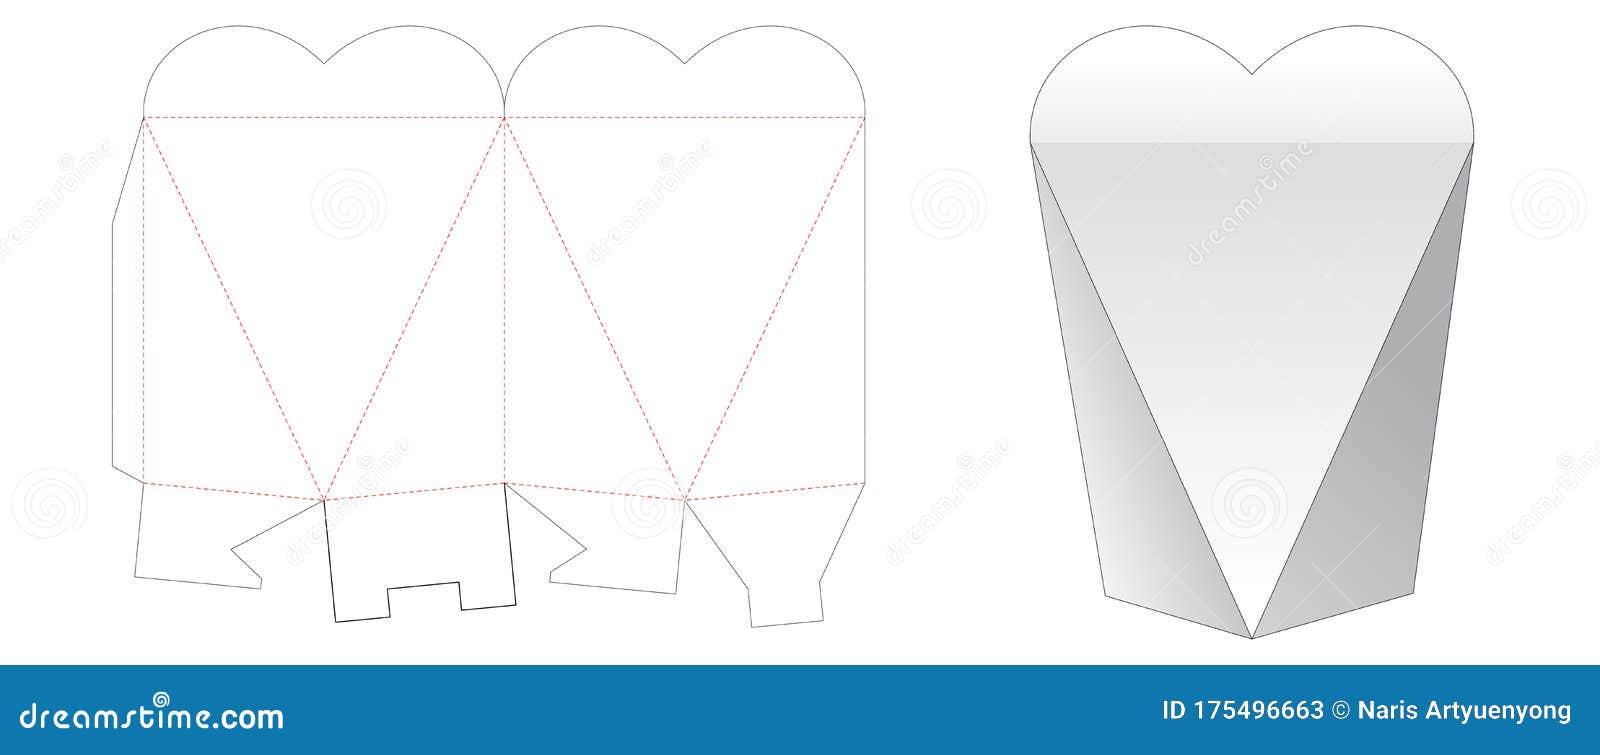 heart shaped gift box cut template stock vector